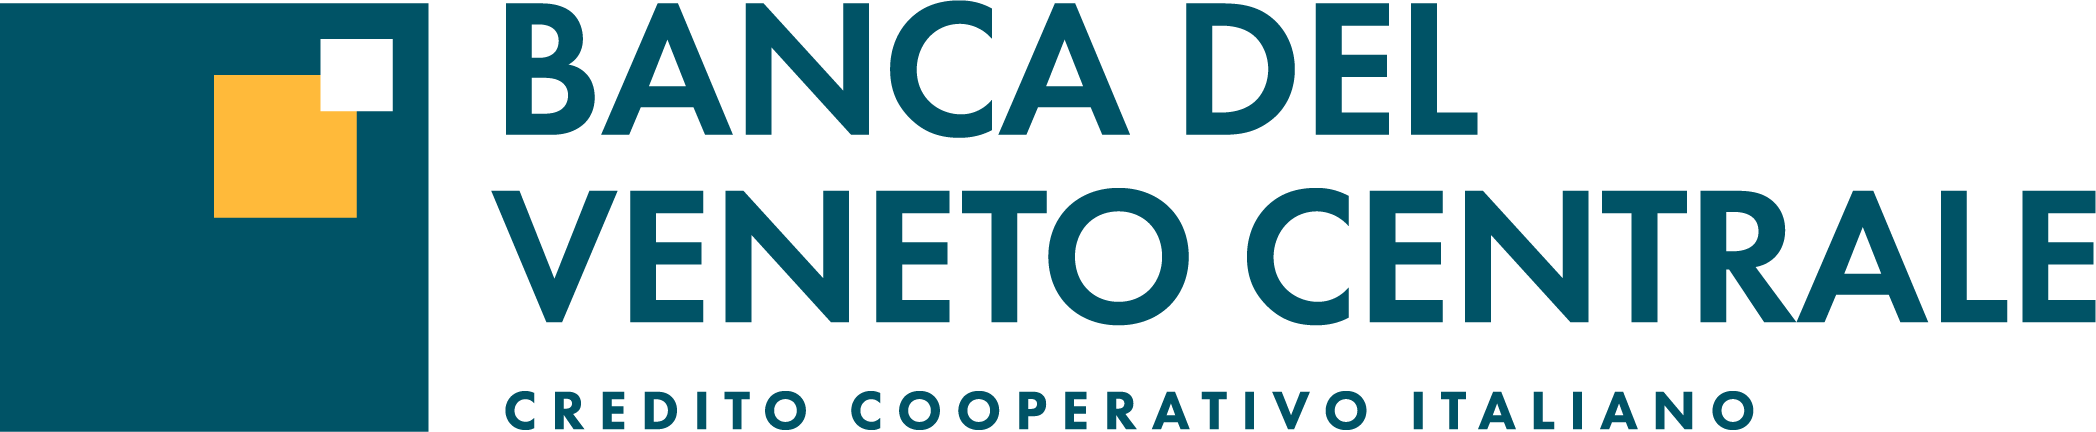 Logo Banca del Veneto Centrale